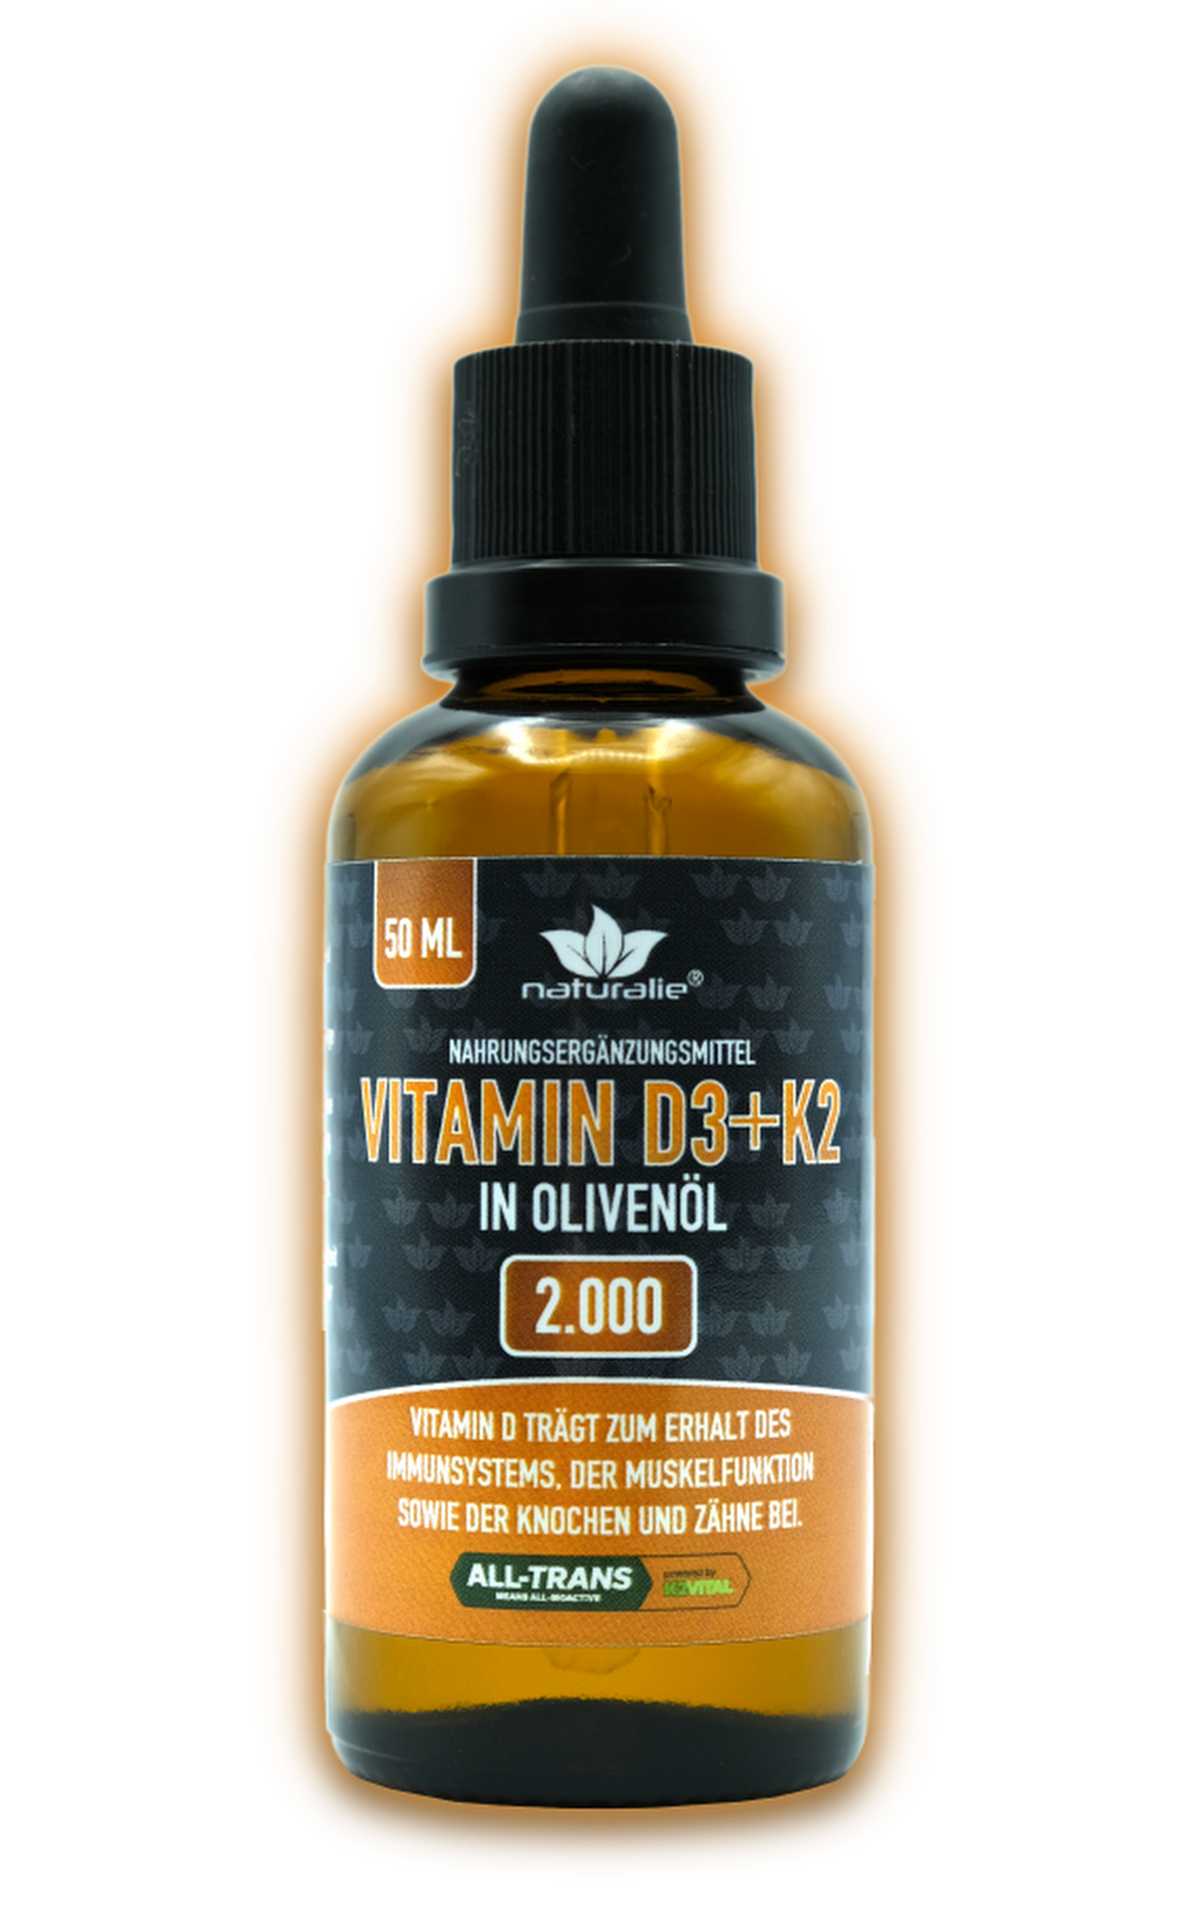 Produktabbildung "Vitamin D3+K2 in Olivenöl" von AMM-Partner naturalie